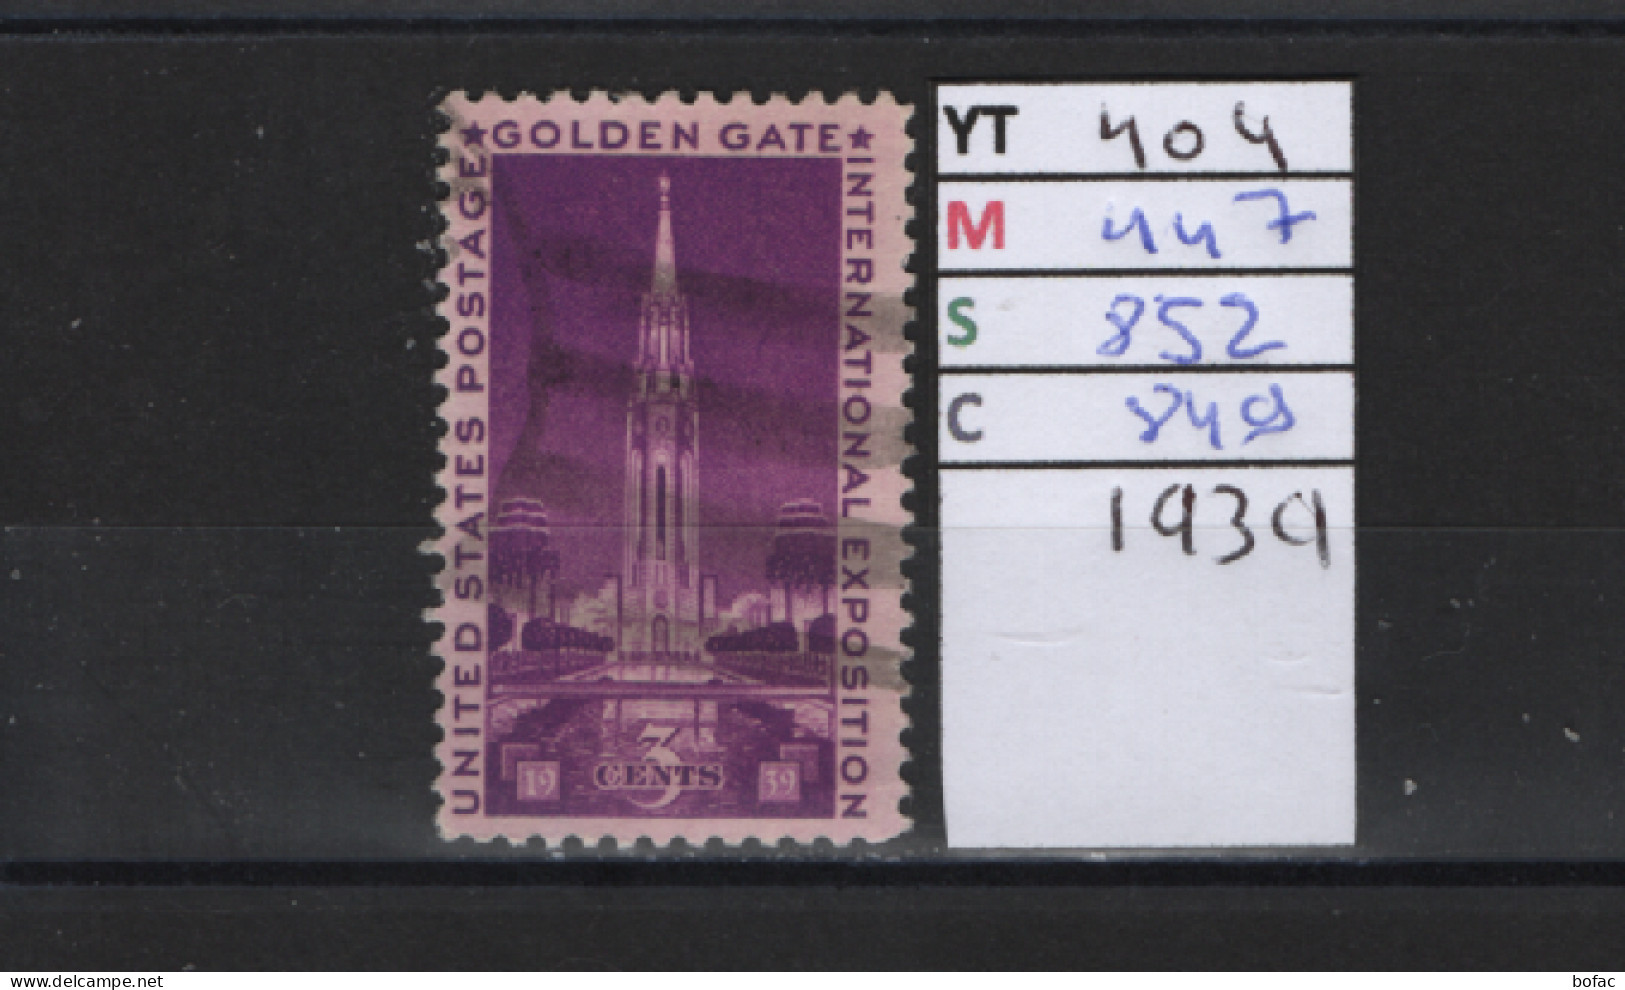 PRIX FIXE Obl 404 YT 447 MIC 852 SCO 849 GIB  Tour Du Soleil Golden Gate 1939 Etats Unis 58A/02 - Used Stamps